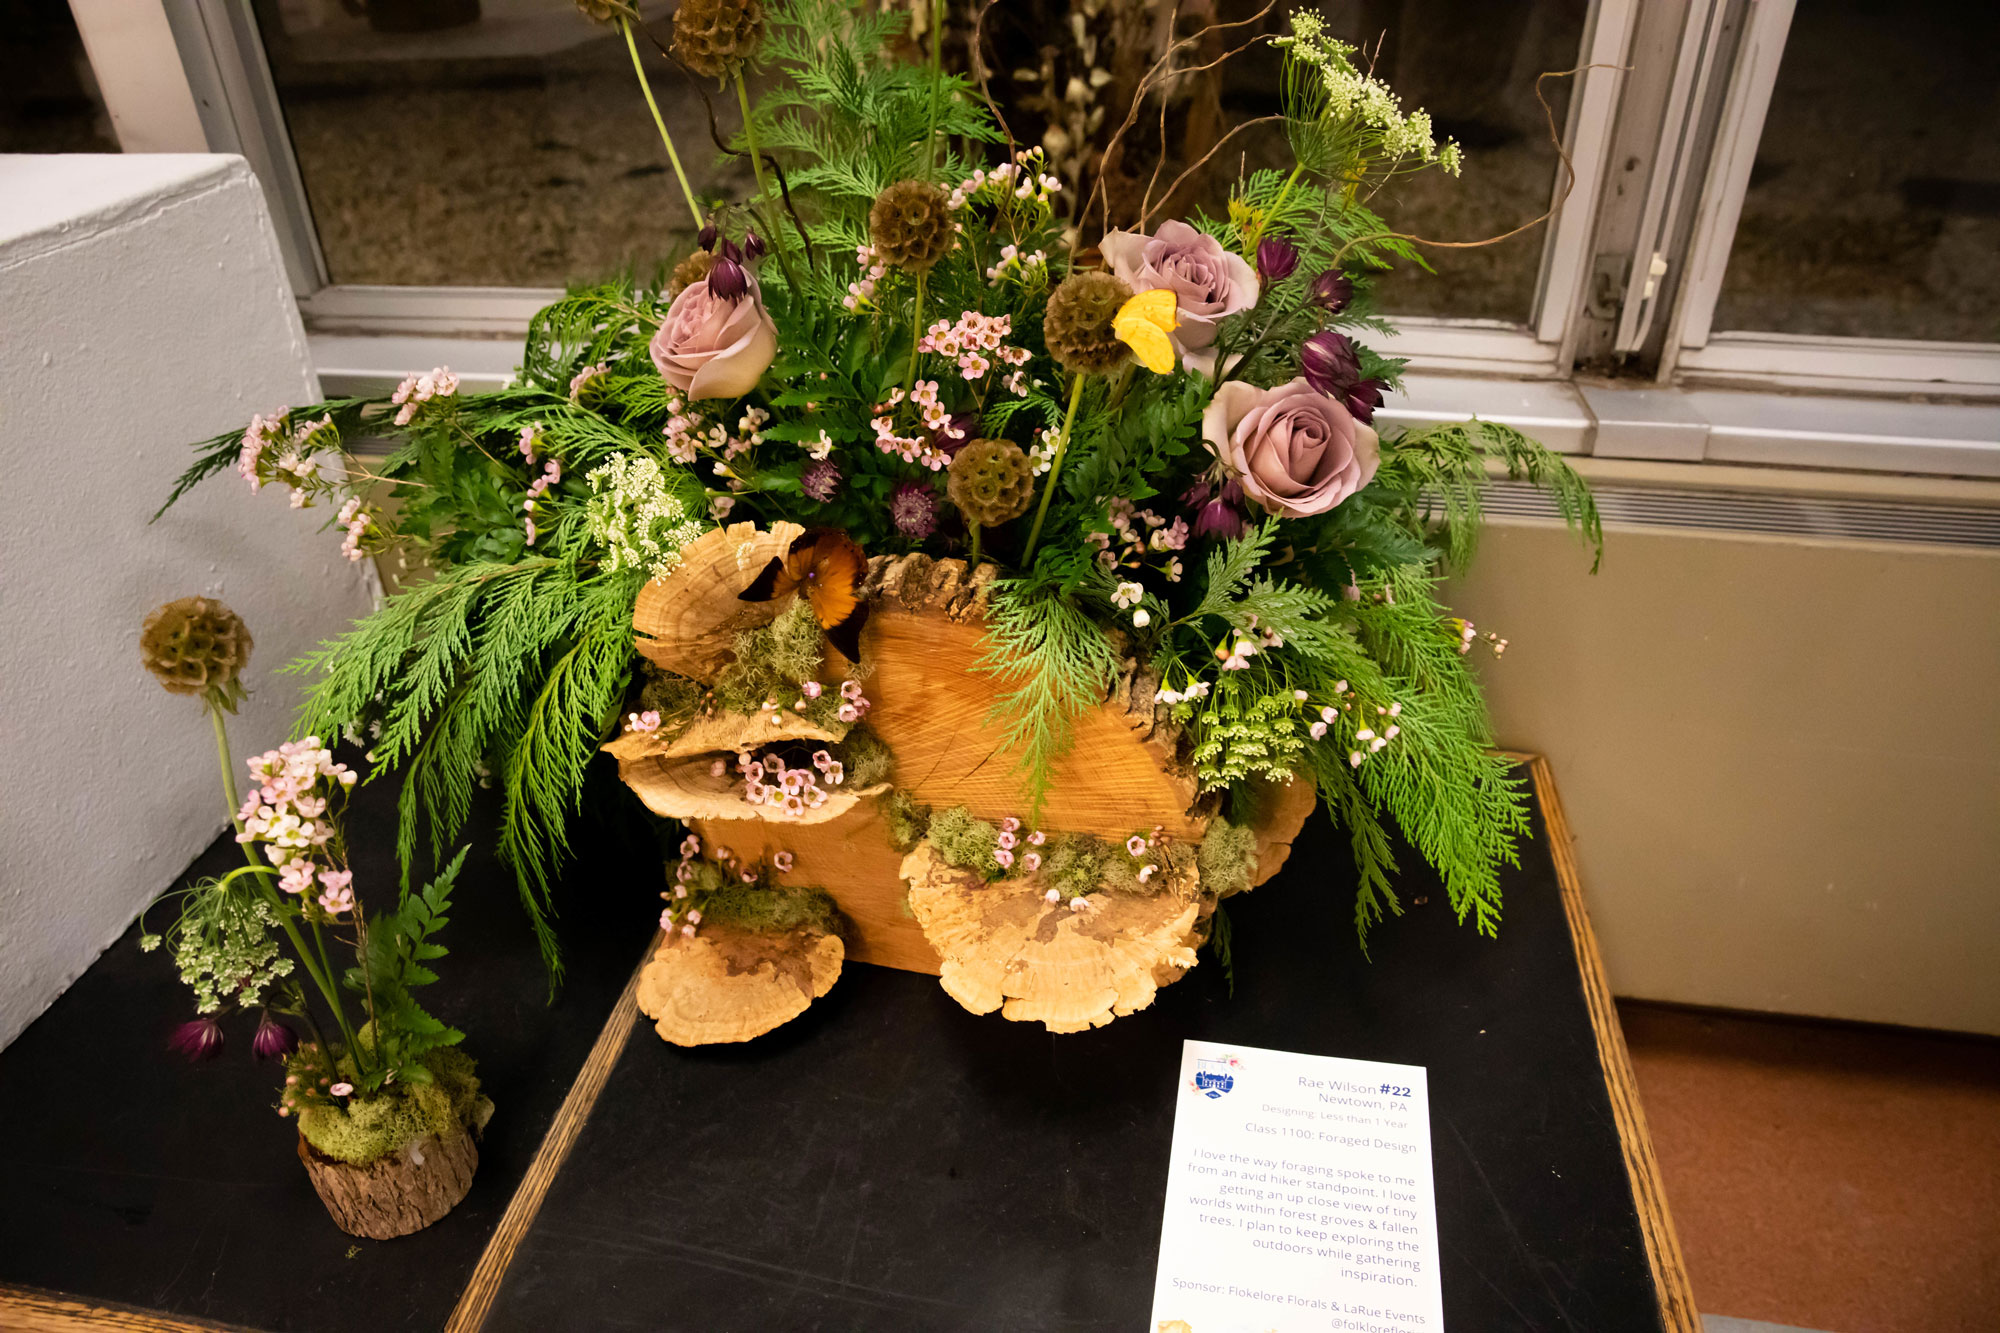 Flower arrangement on display